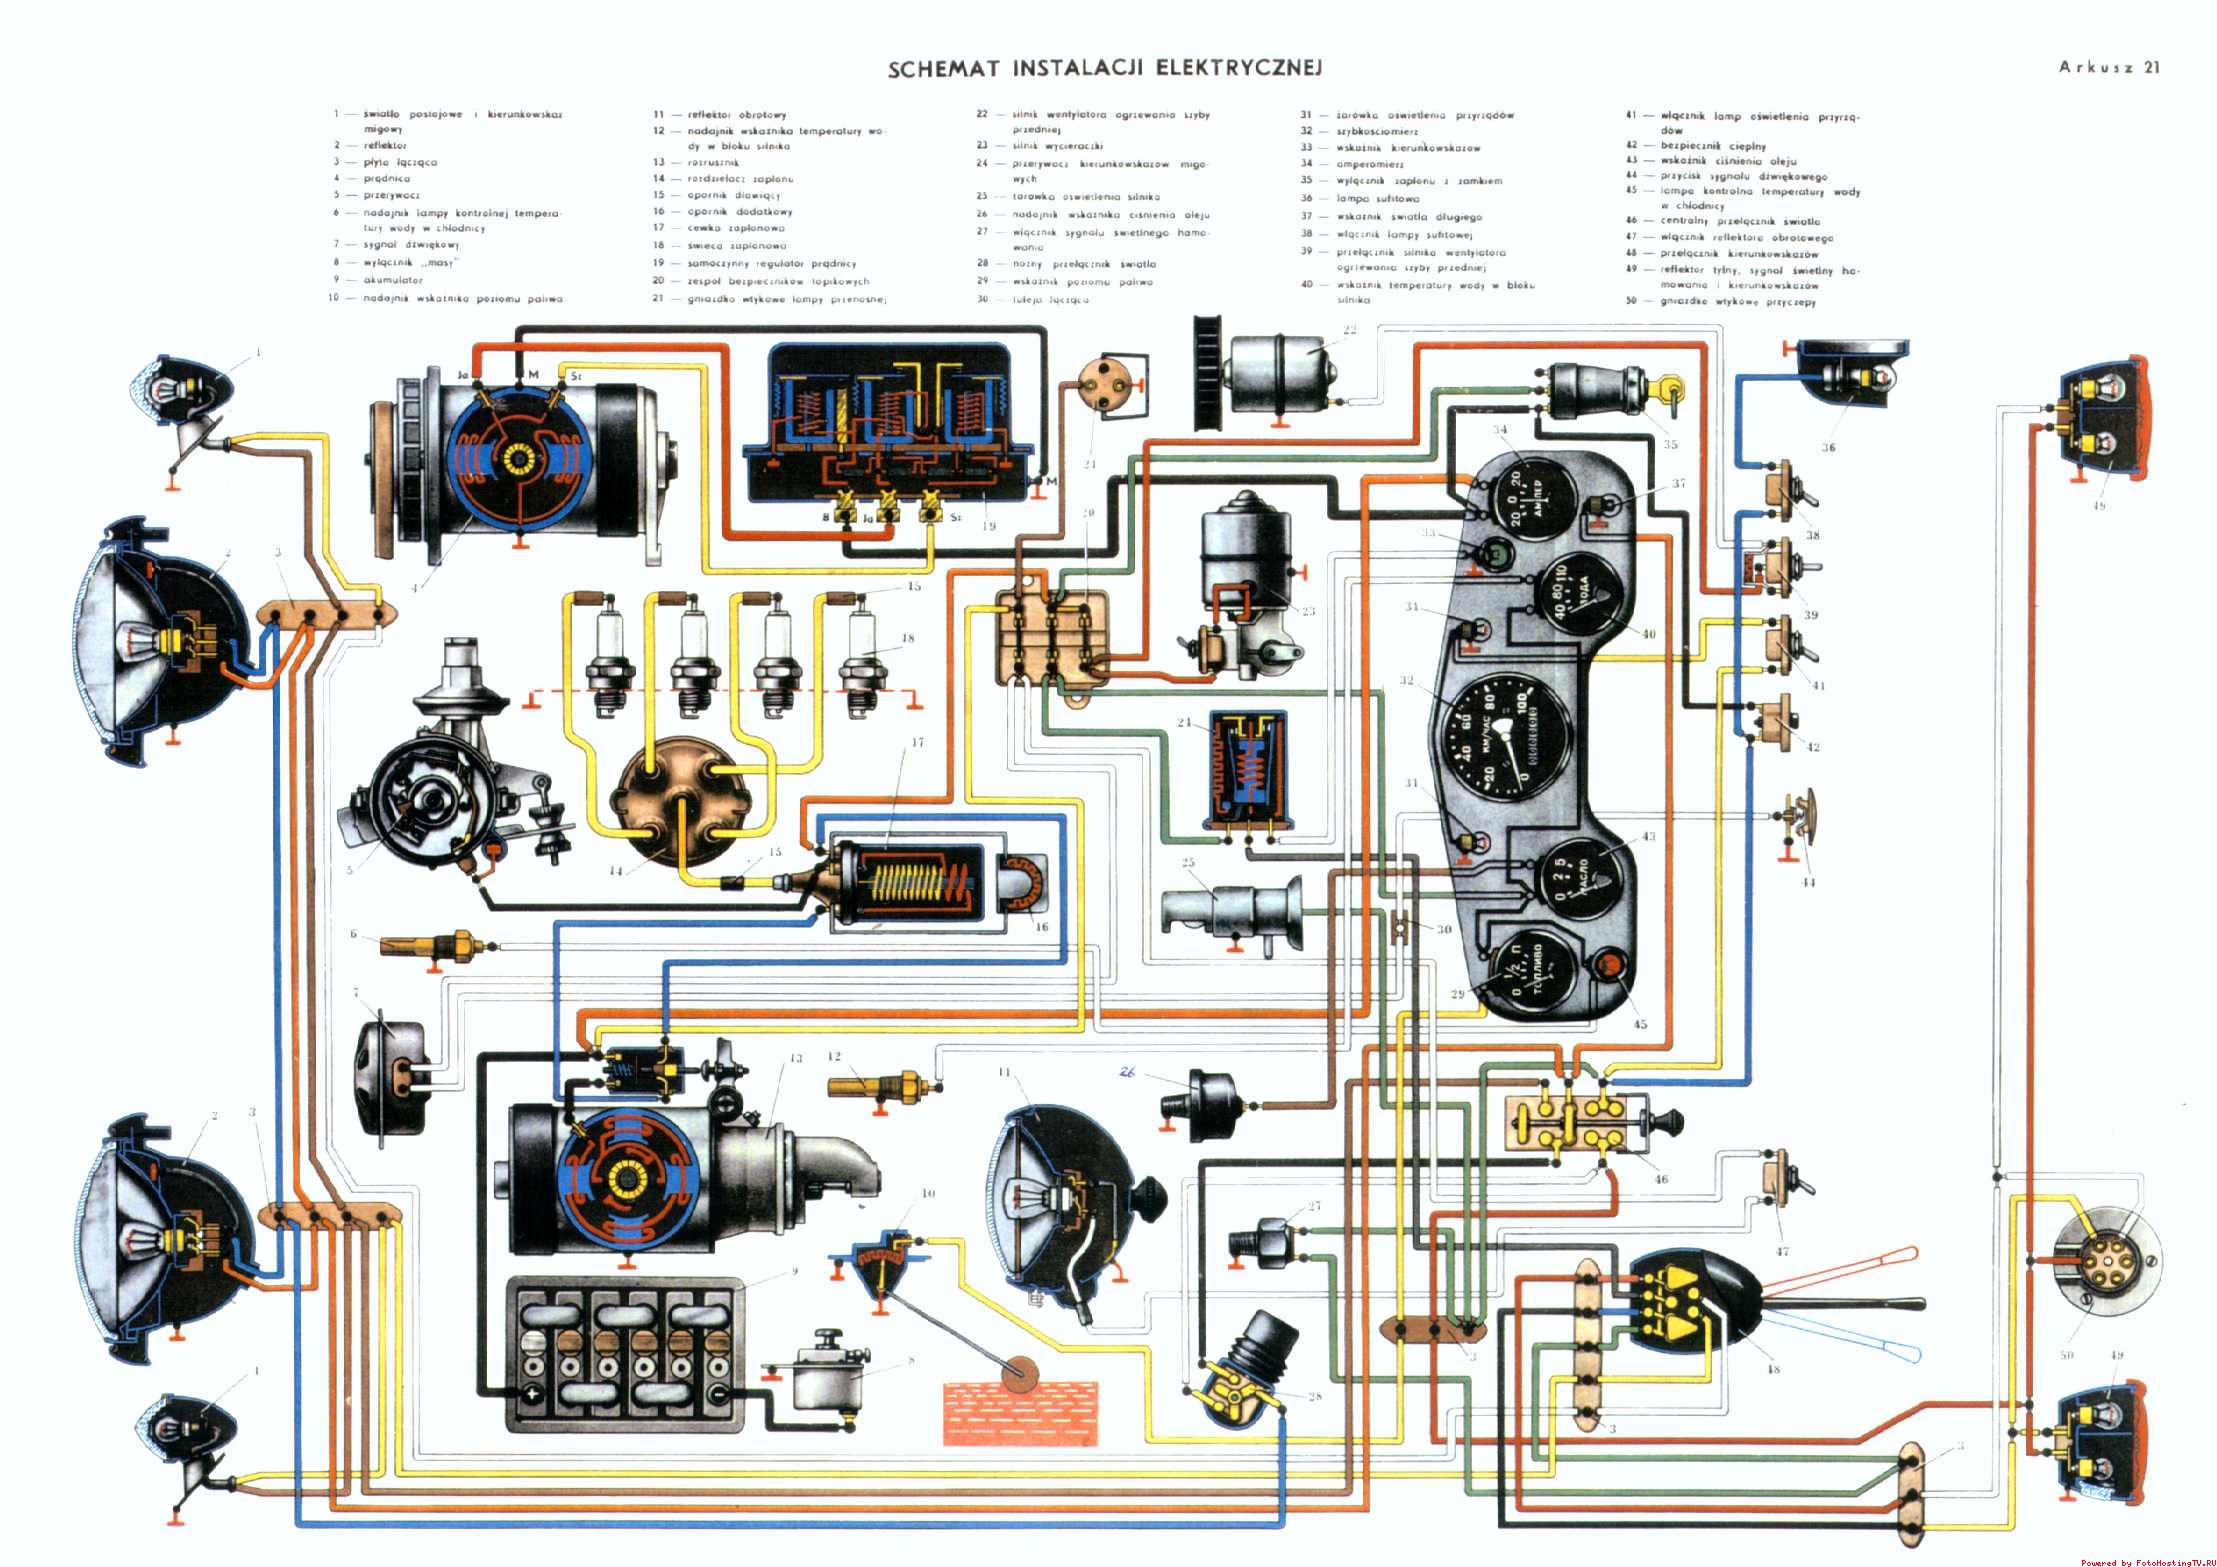 Схема электропроводки на газ 53